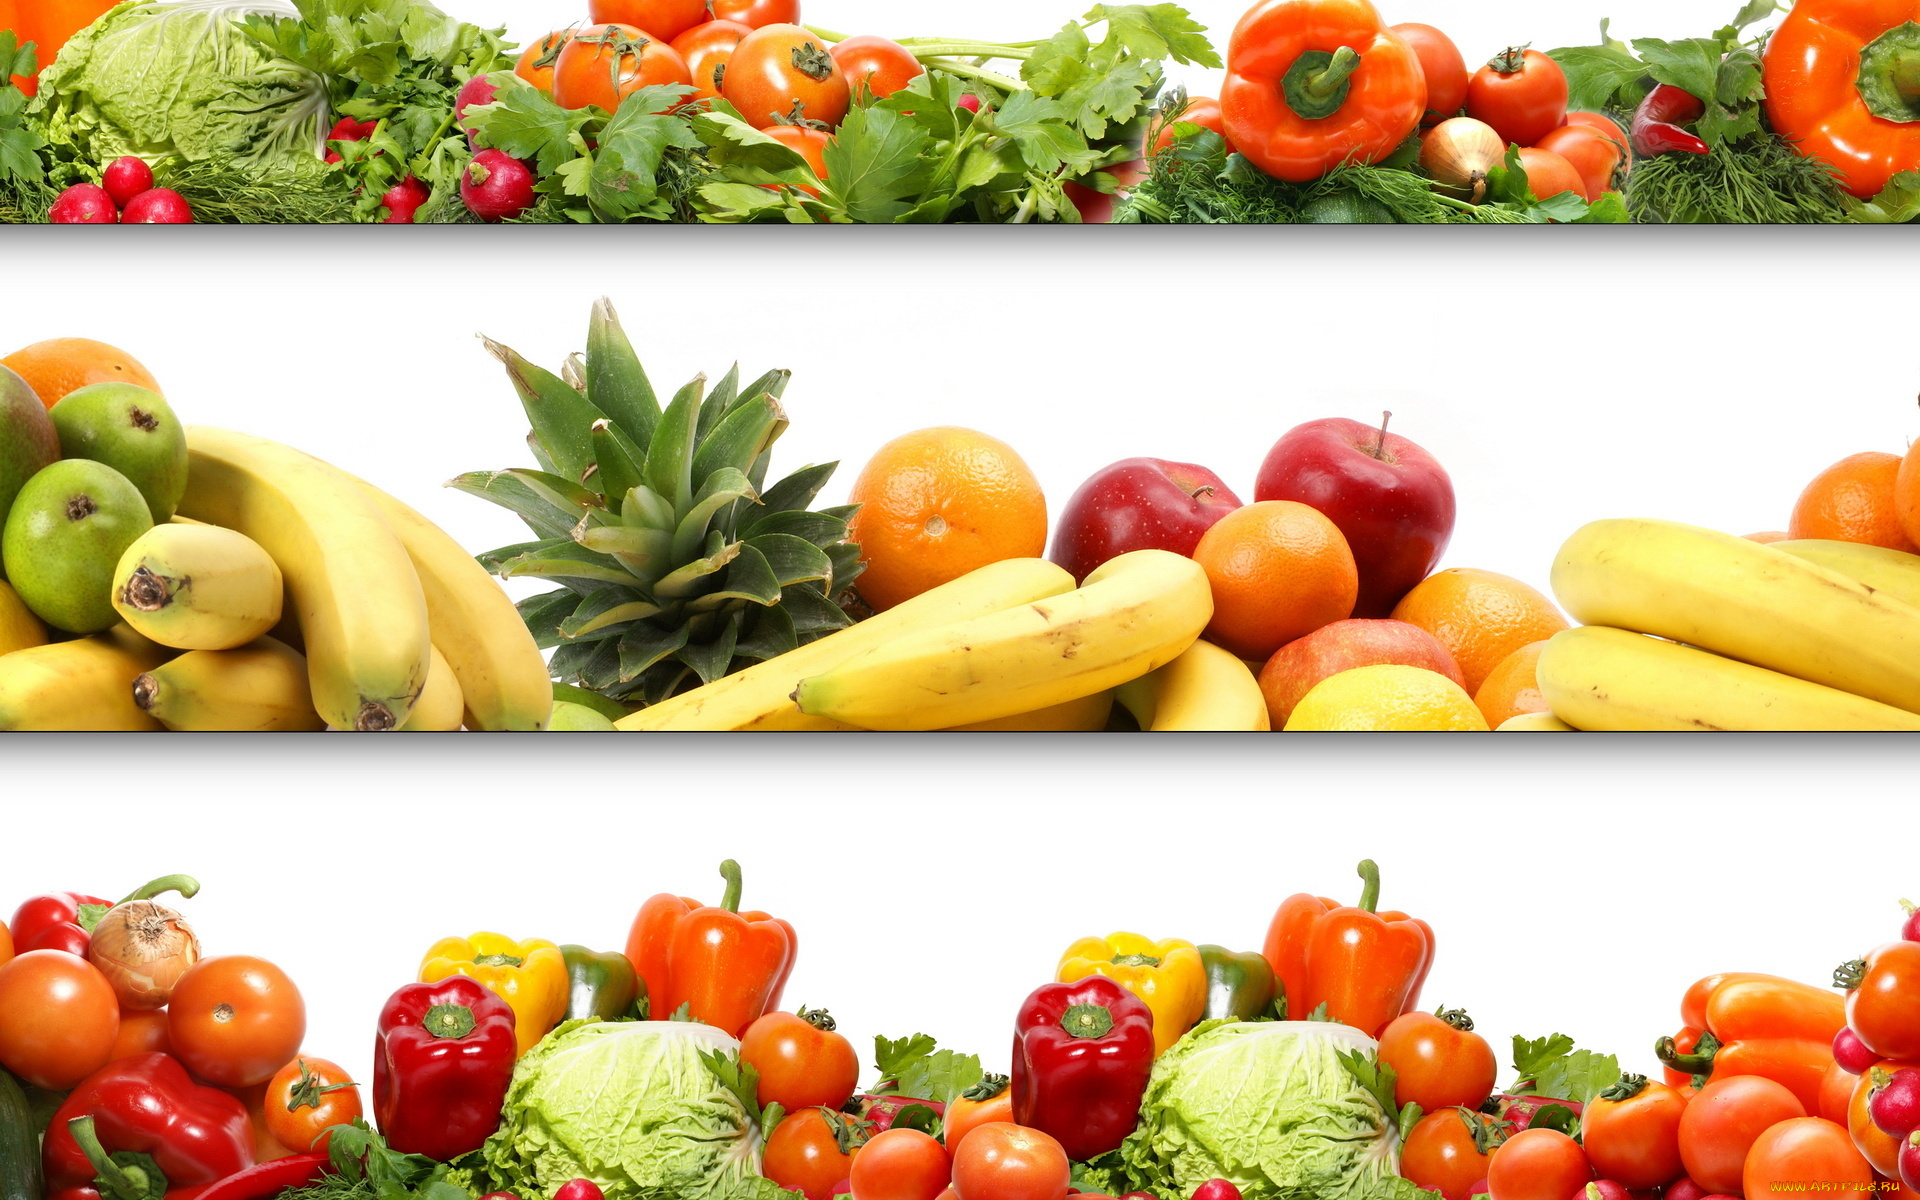 еда, фрукты, овощи, вместе, помидоры, перец, бананы, яблоки, зелень, томаты